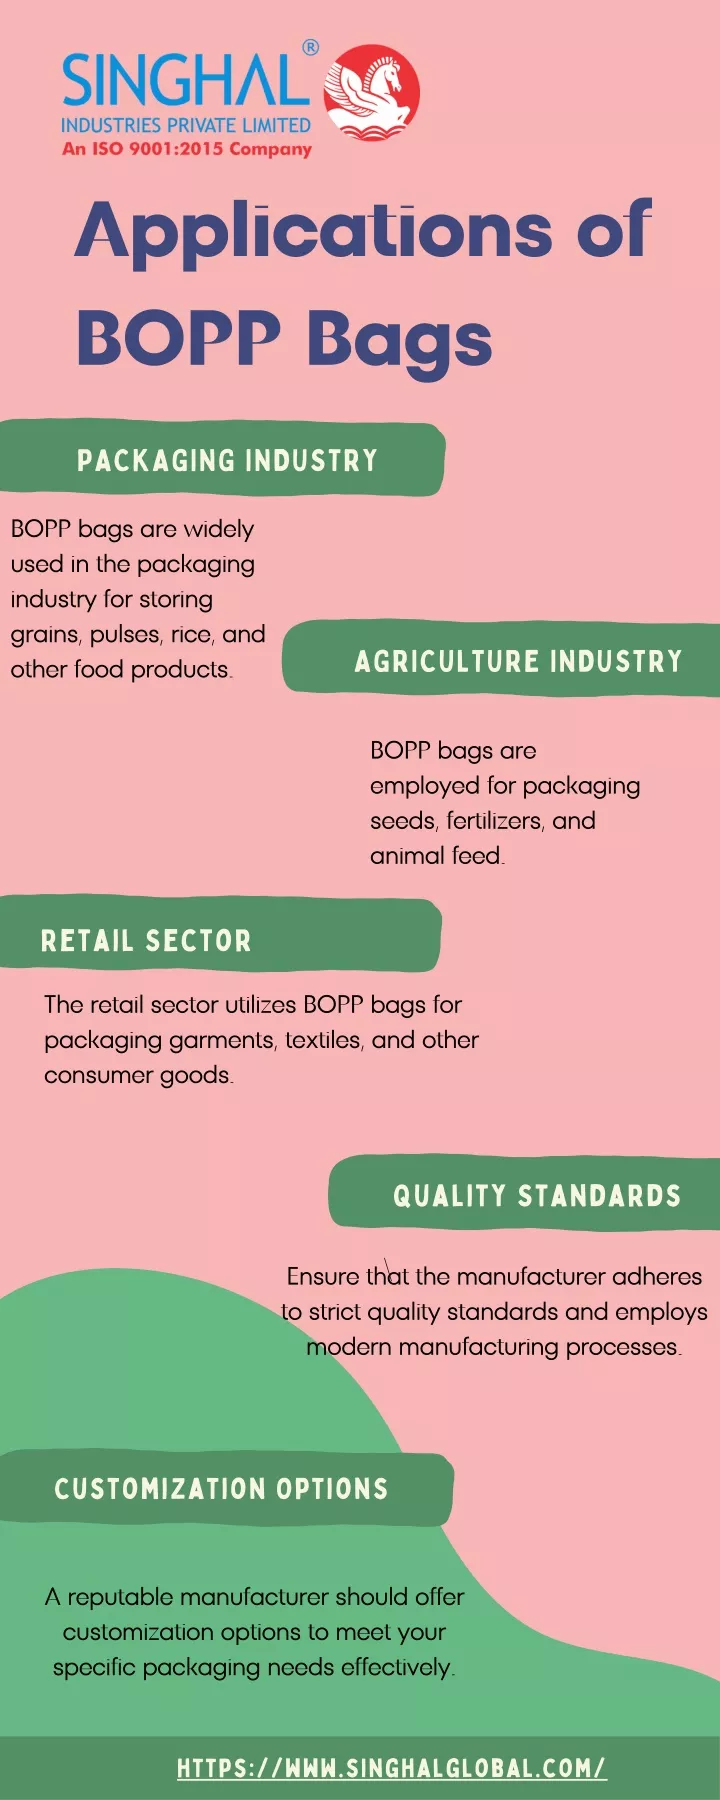 applications of bopp bags